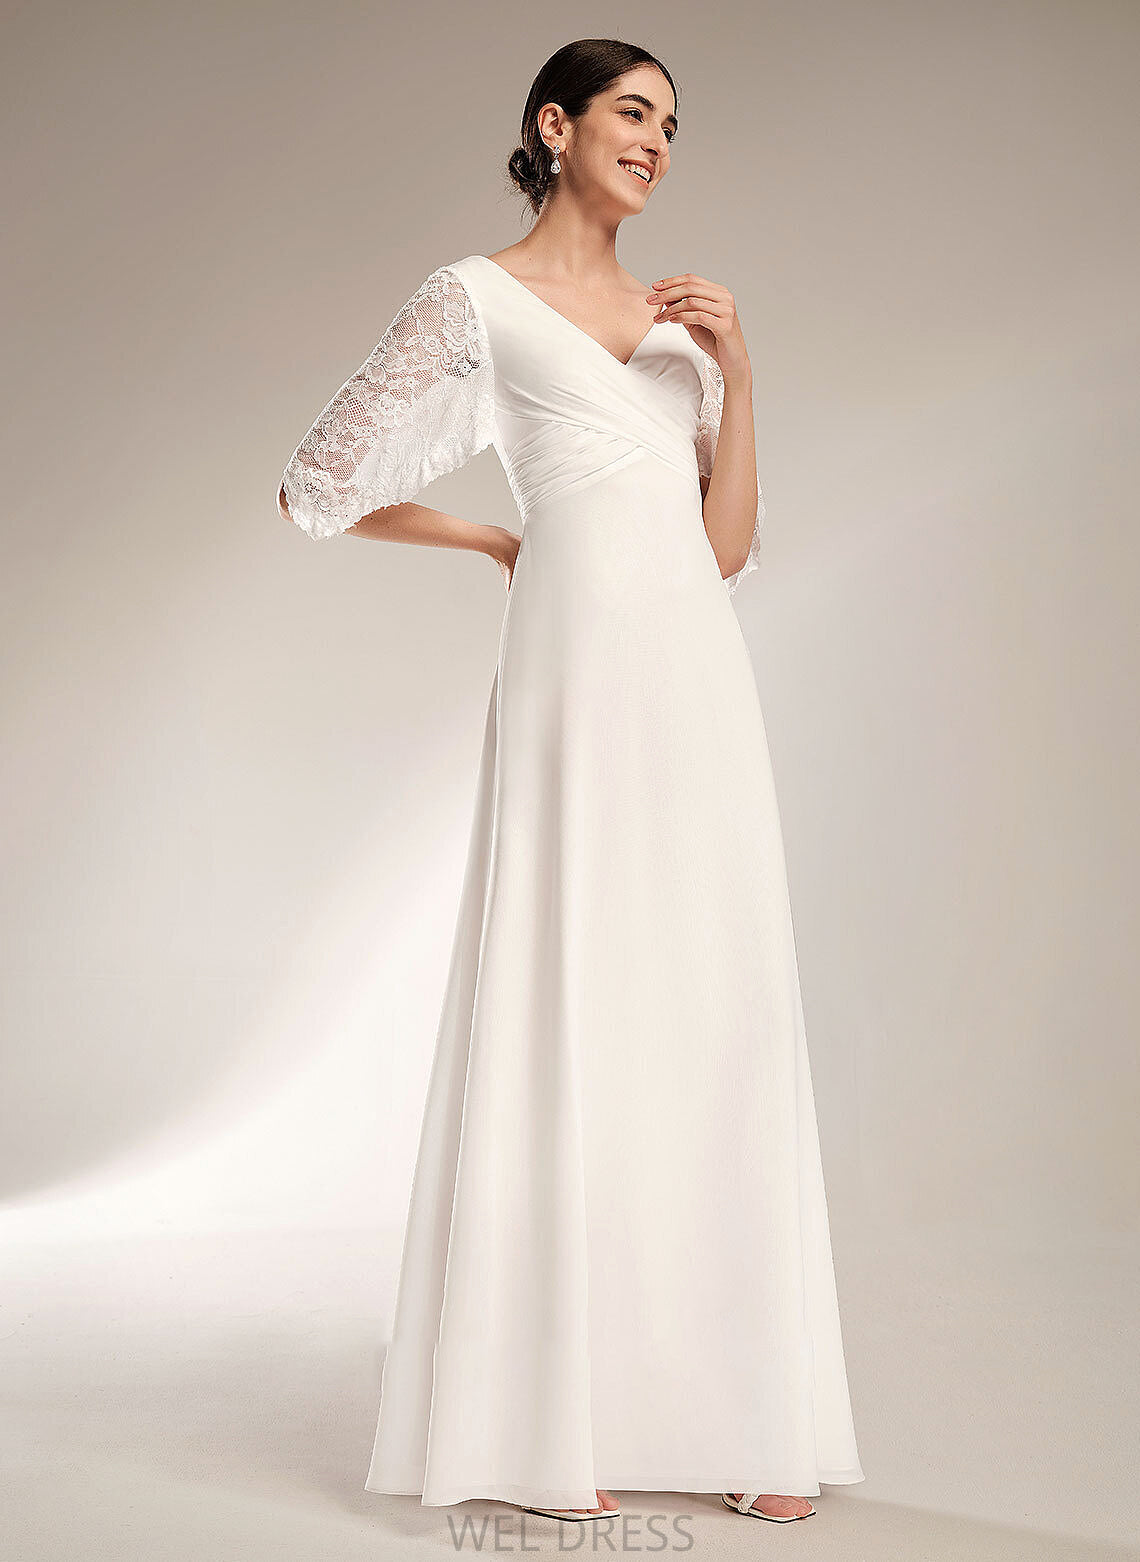 Lace Sheath/Column Dress Wedding Wedding Dresses Floor-Length Novia V-neck With